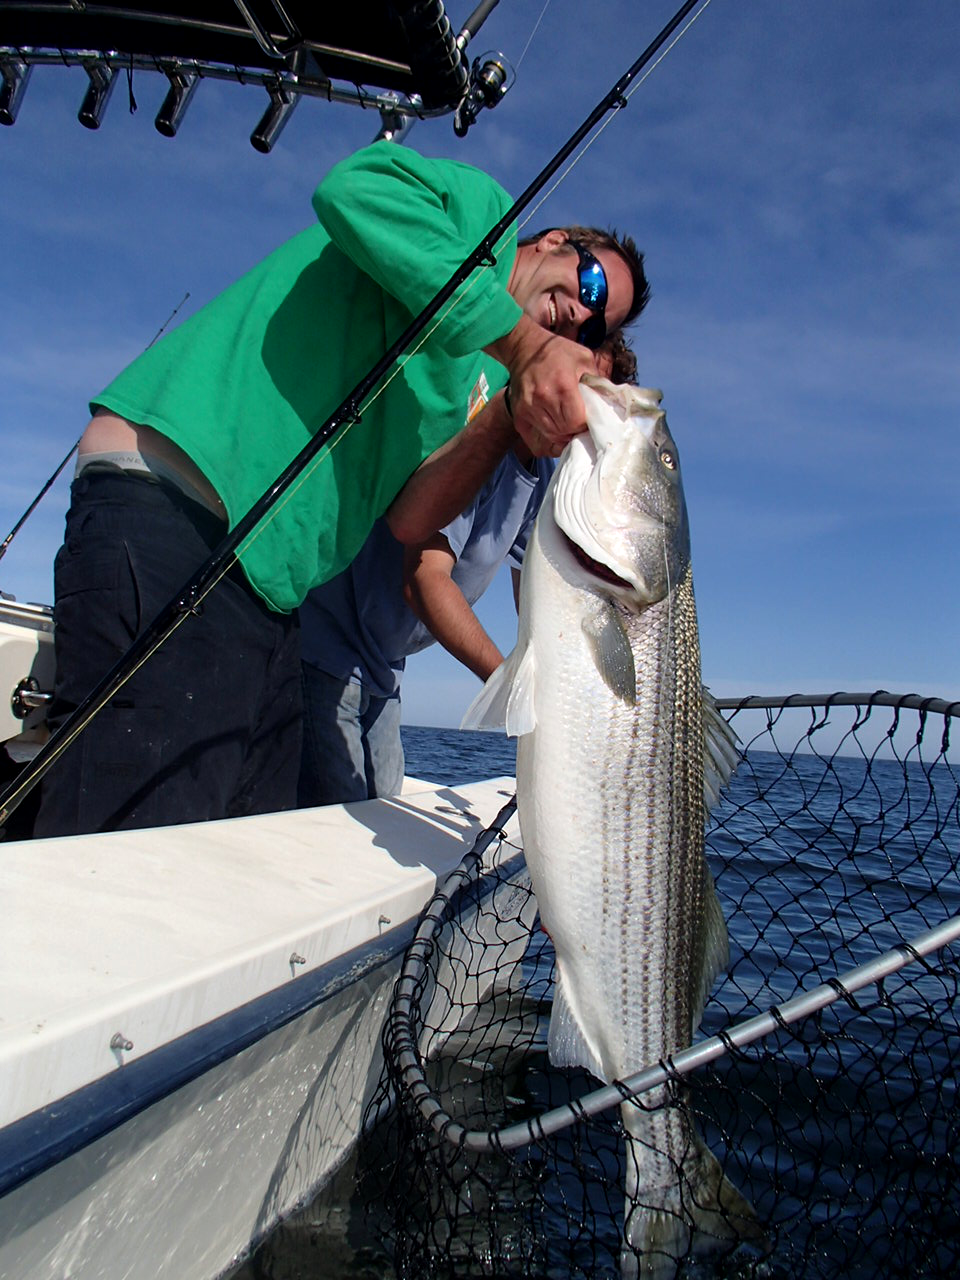 Fishing Tips: 3 Rules for Netting Big Fish